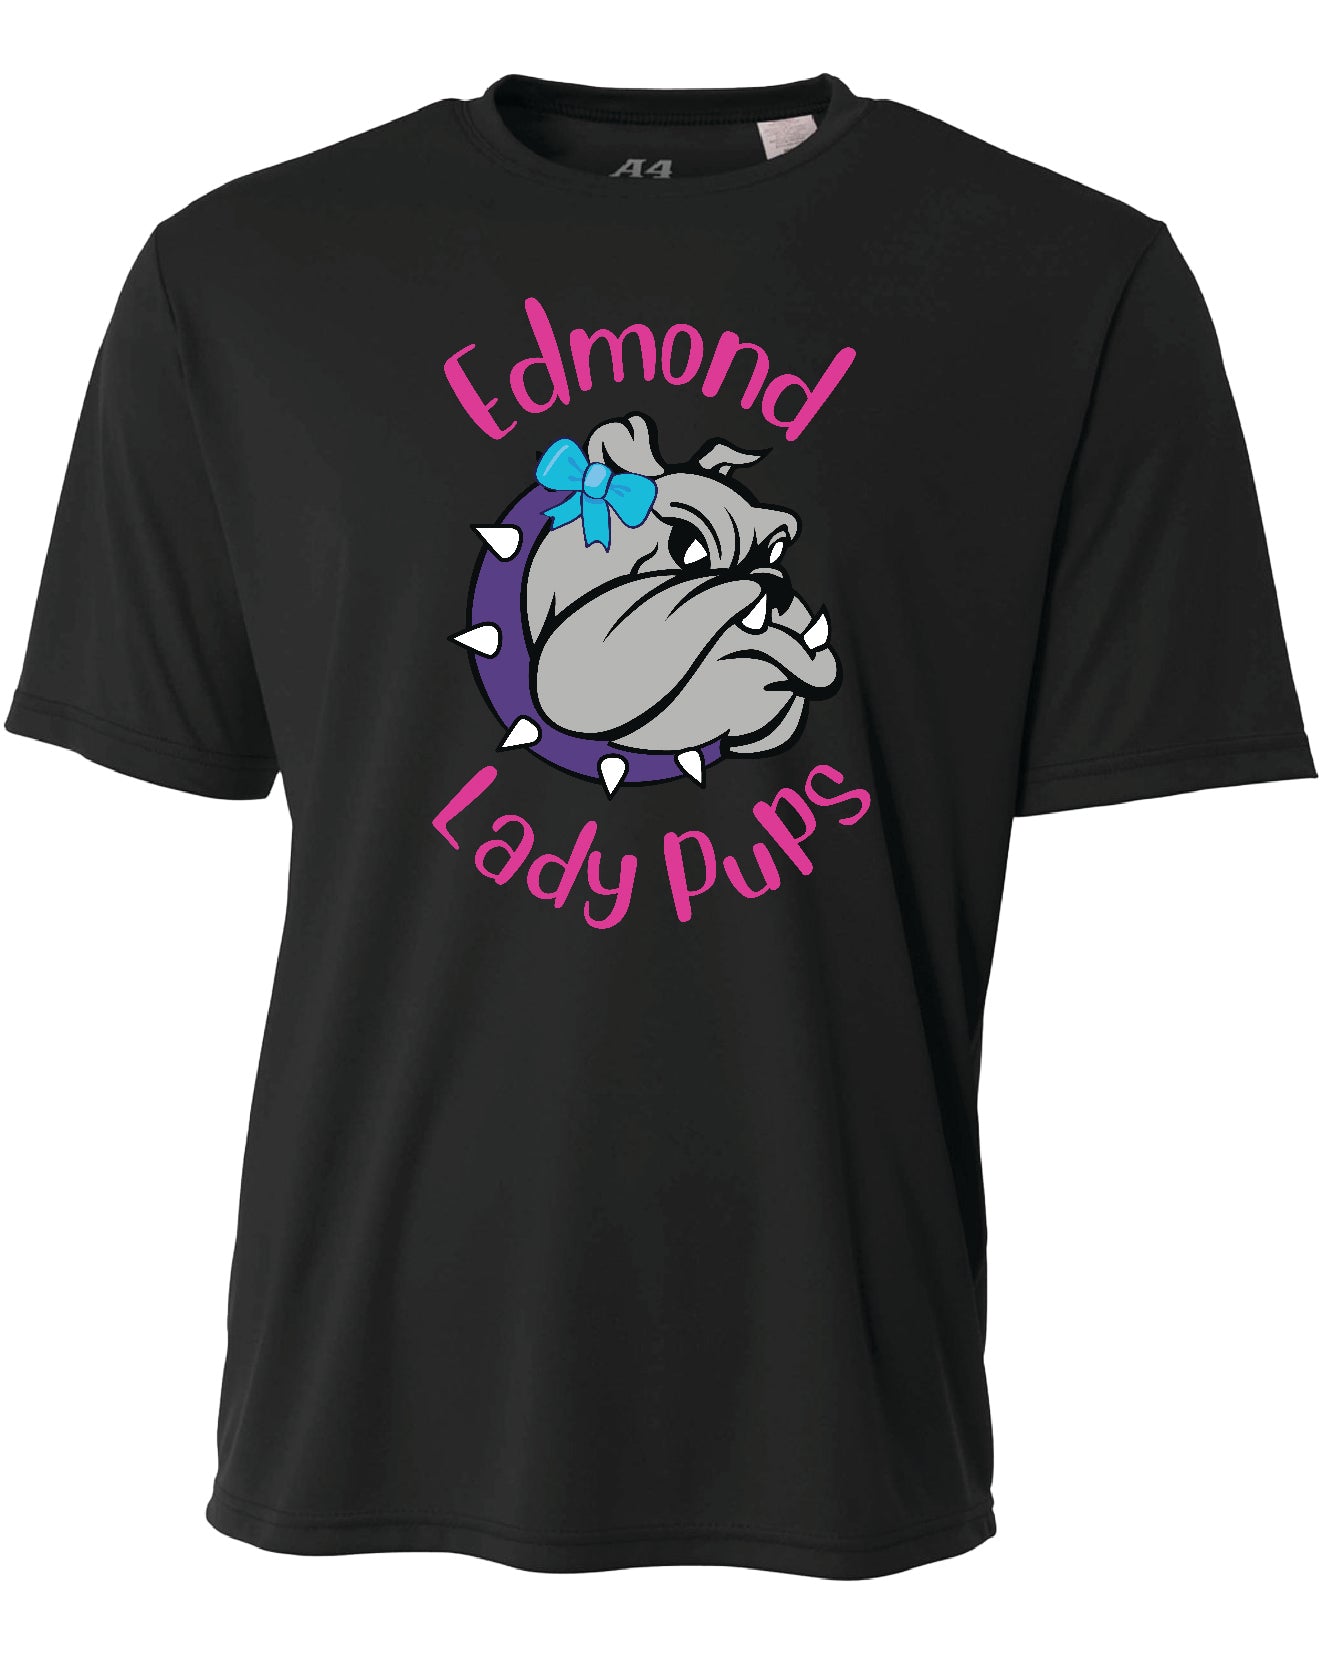 Edmond Lady Pups Dri Fit Short Sleeve Shirt